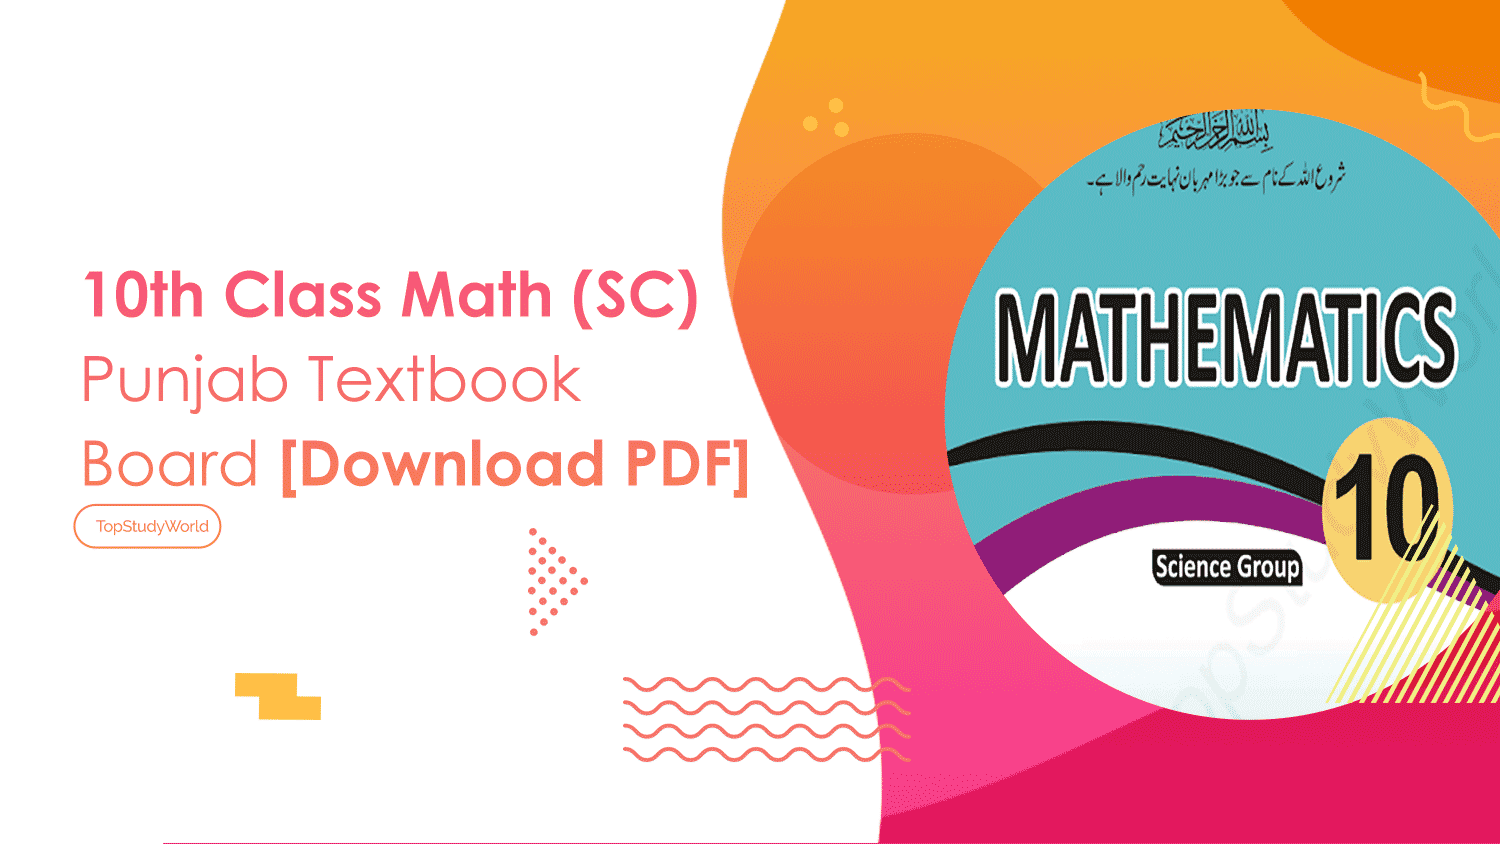 Livro de matematica 10° classe pdf download